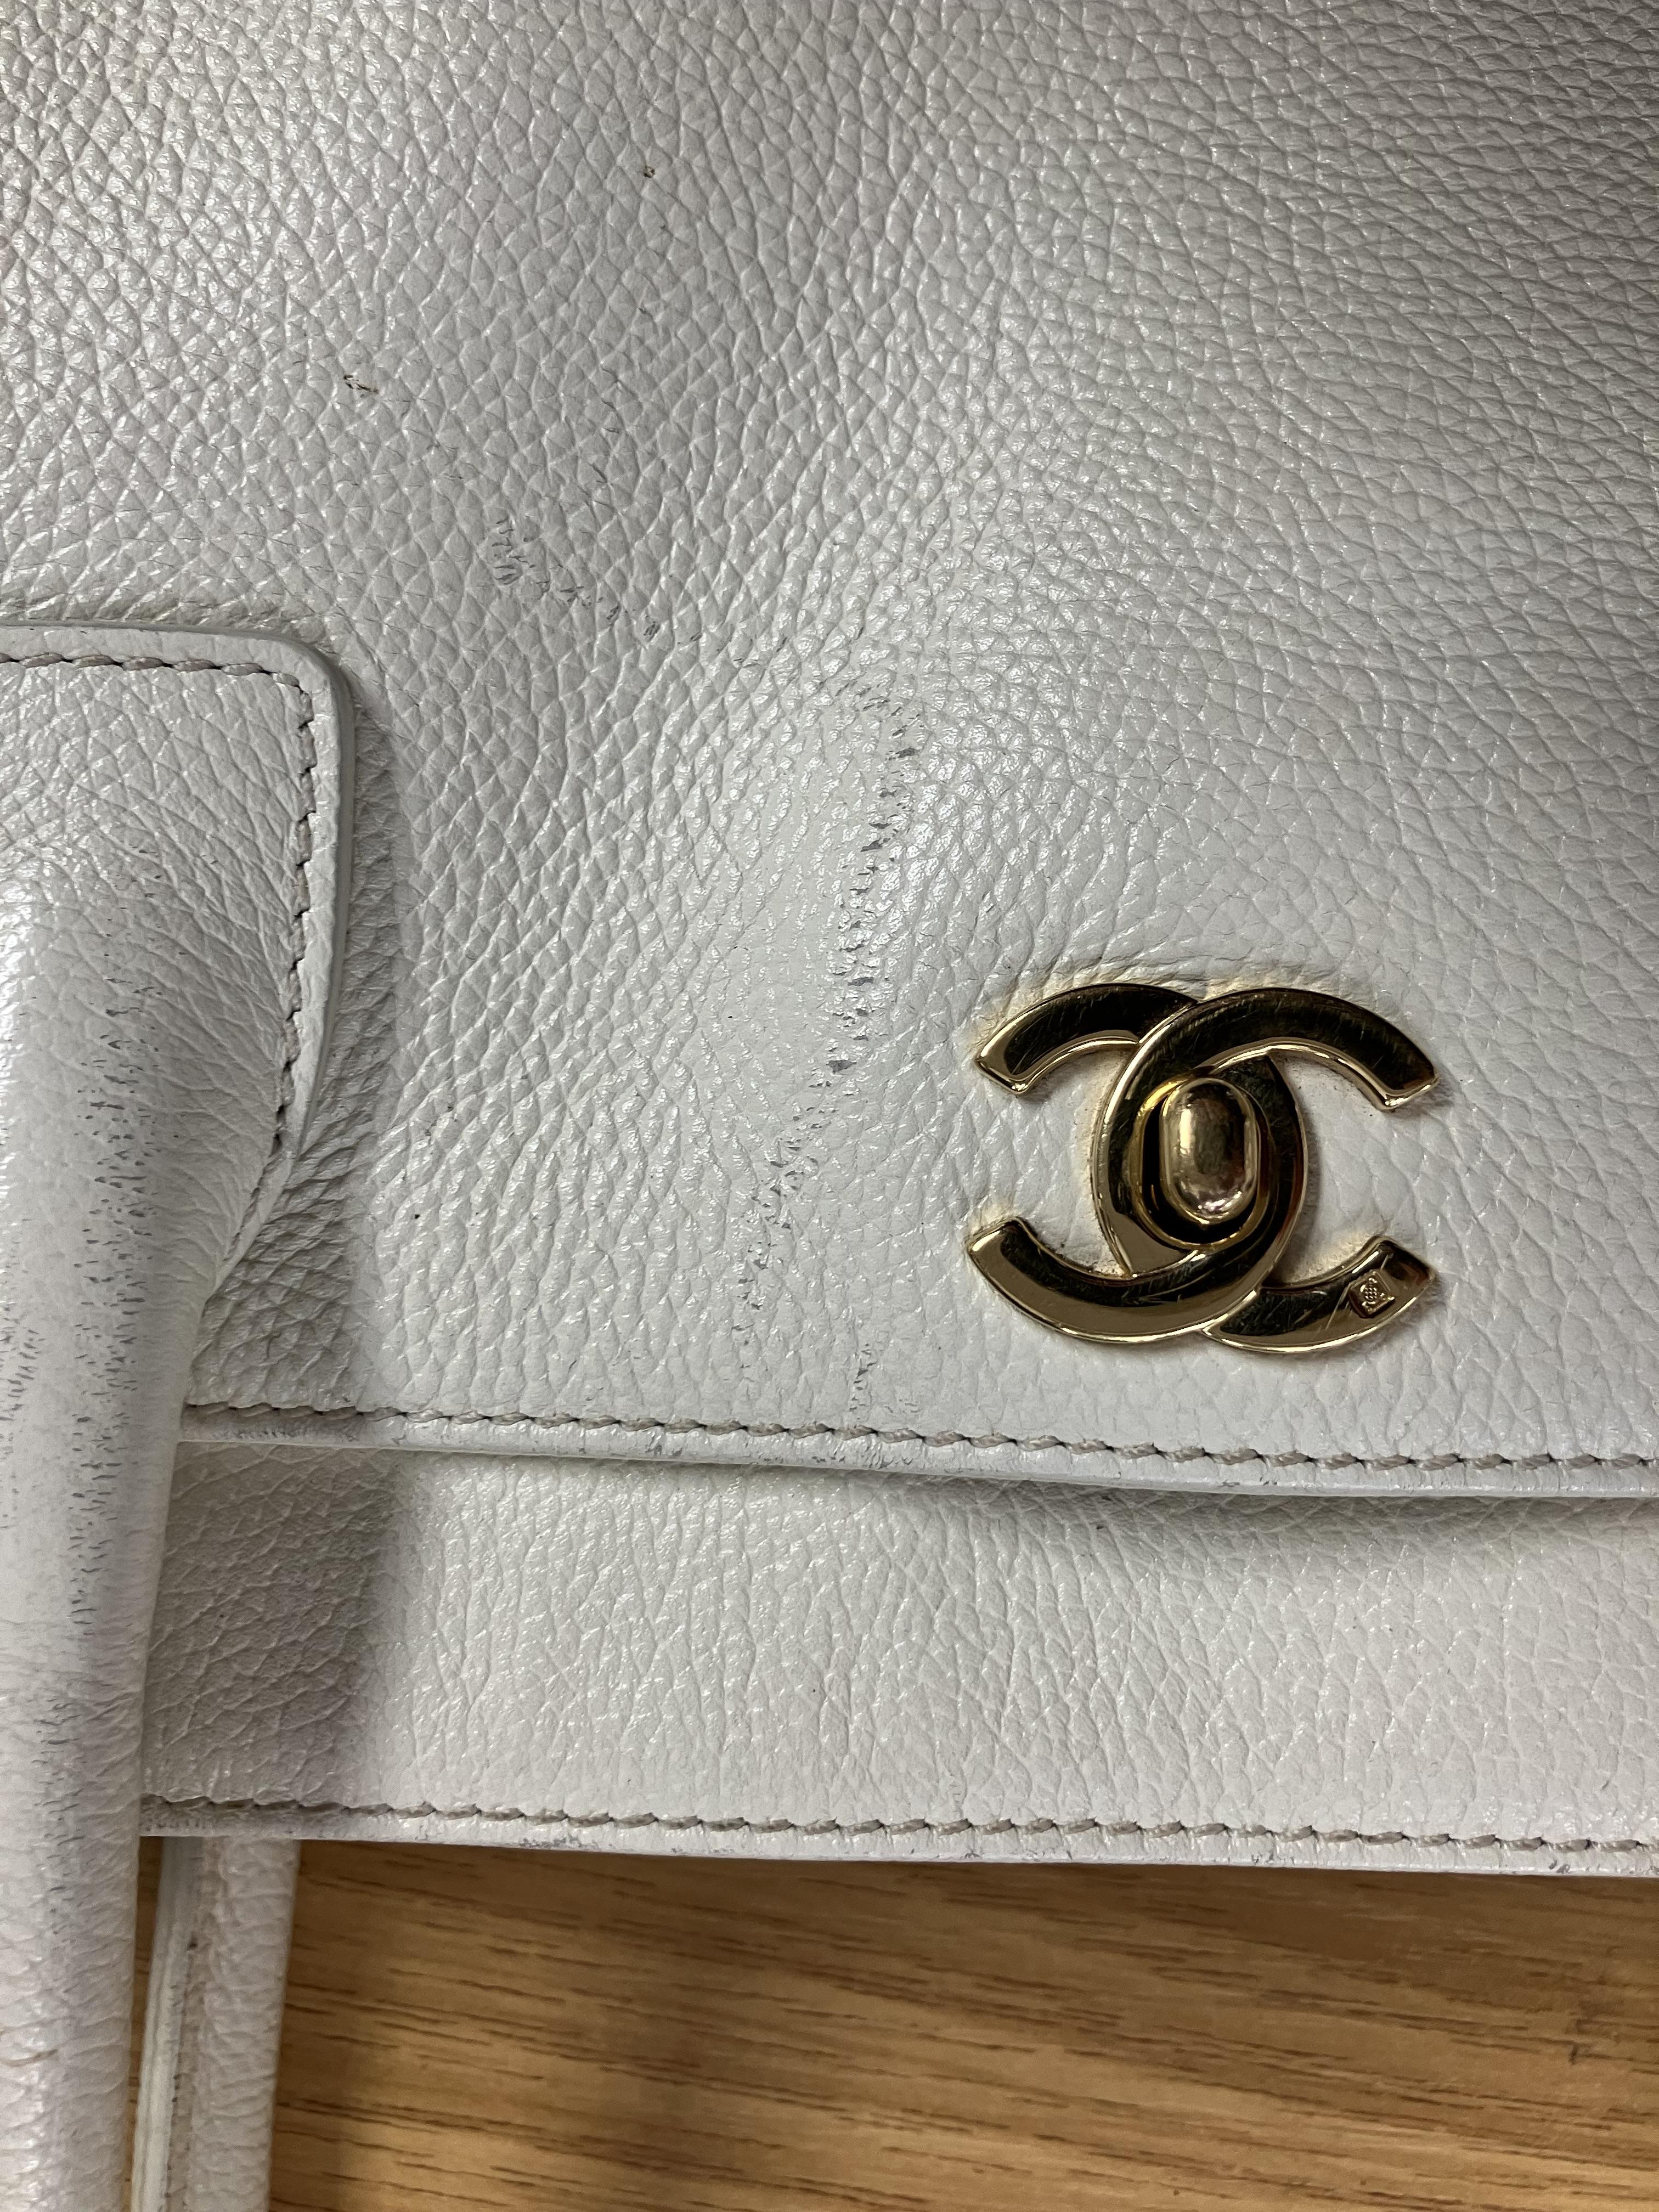 A Chanel Cerf bag in white grain calves - Image 37 of 40